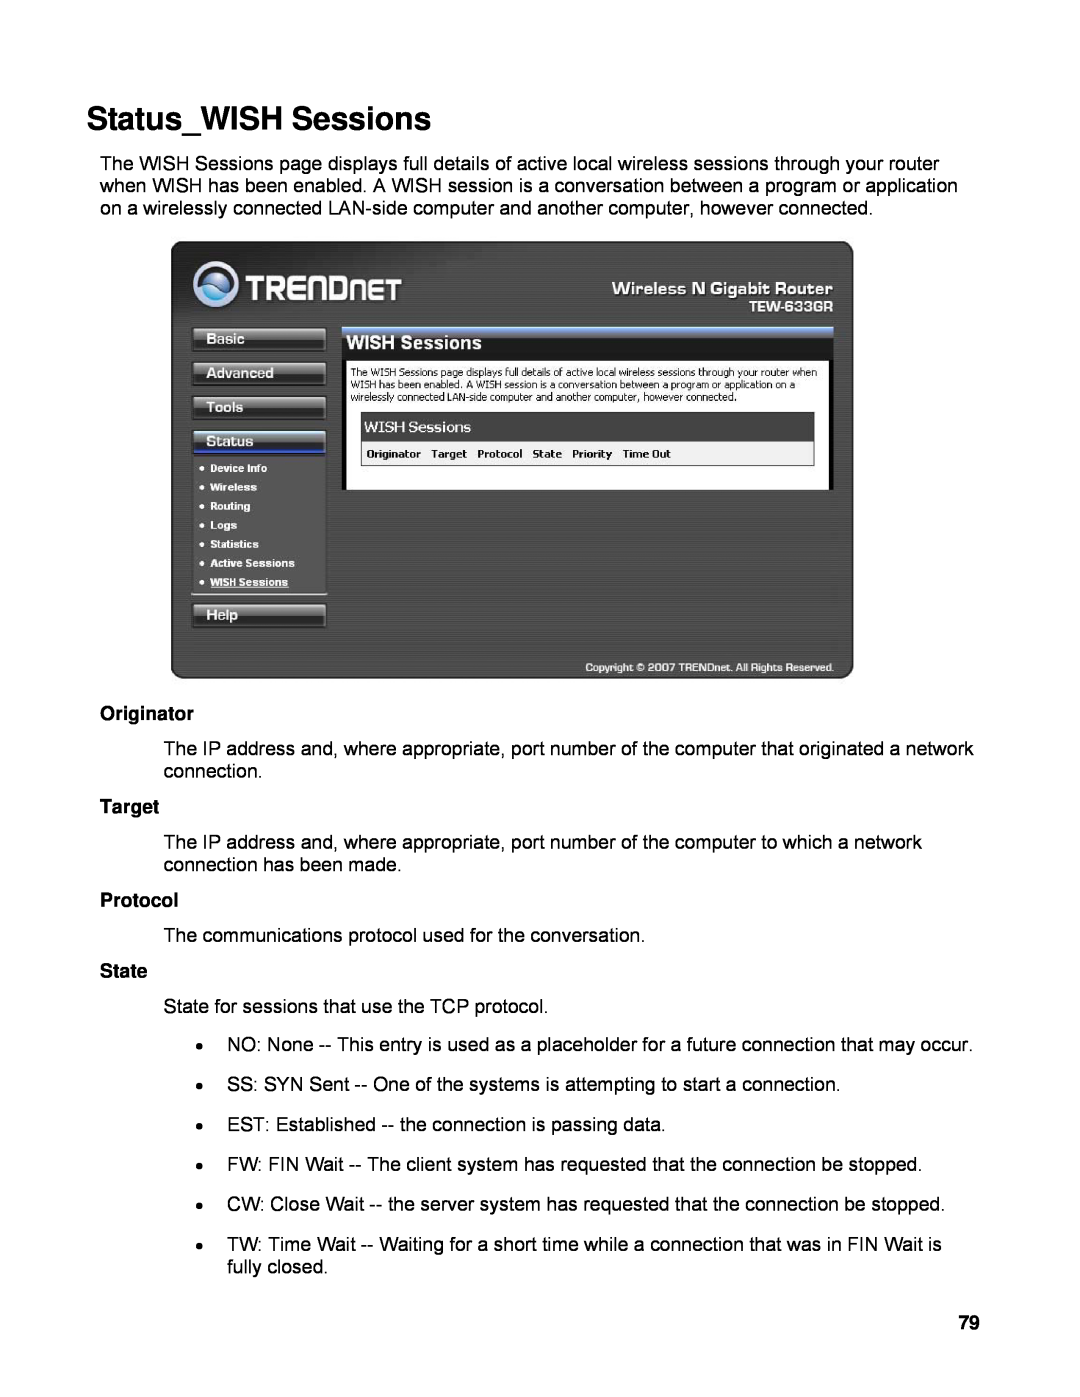 TRENDnet TEW-633GR manual StatusWISH Sessions, Originator, Target, Protocol, State 